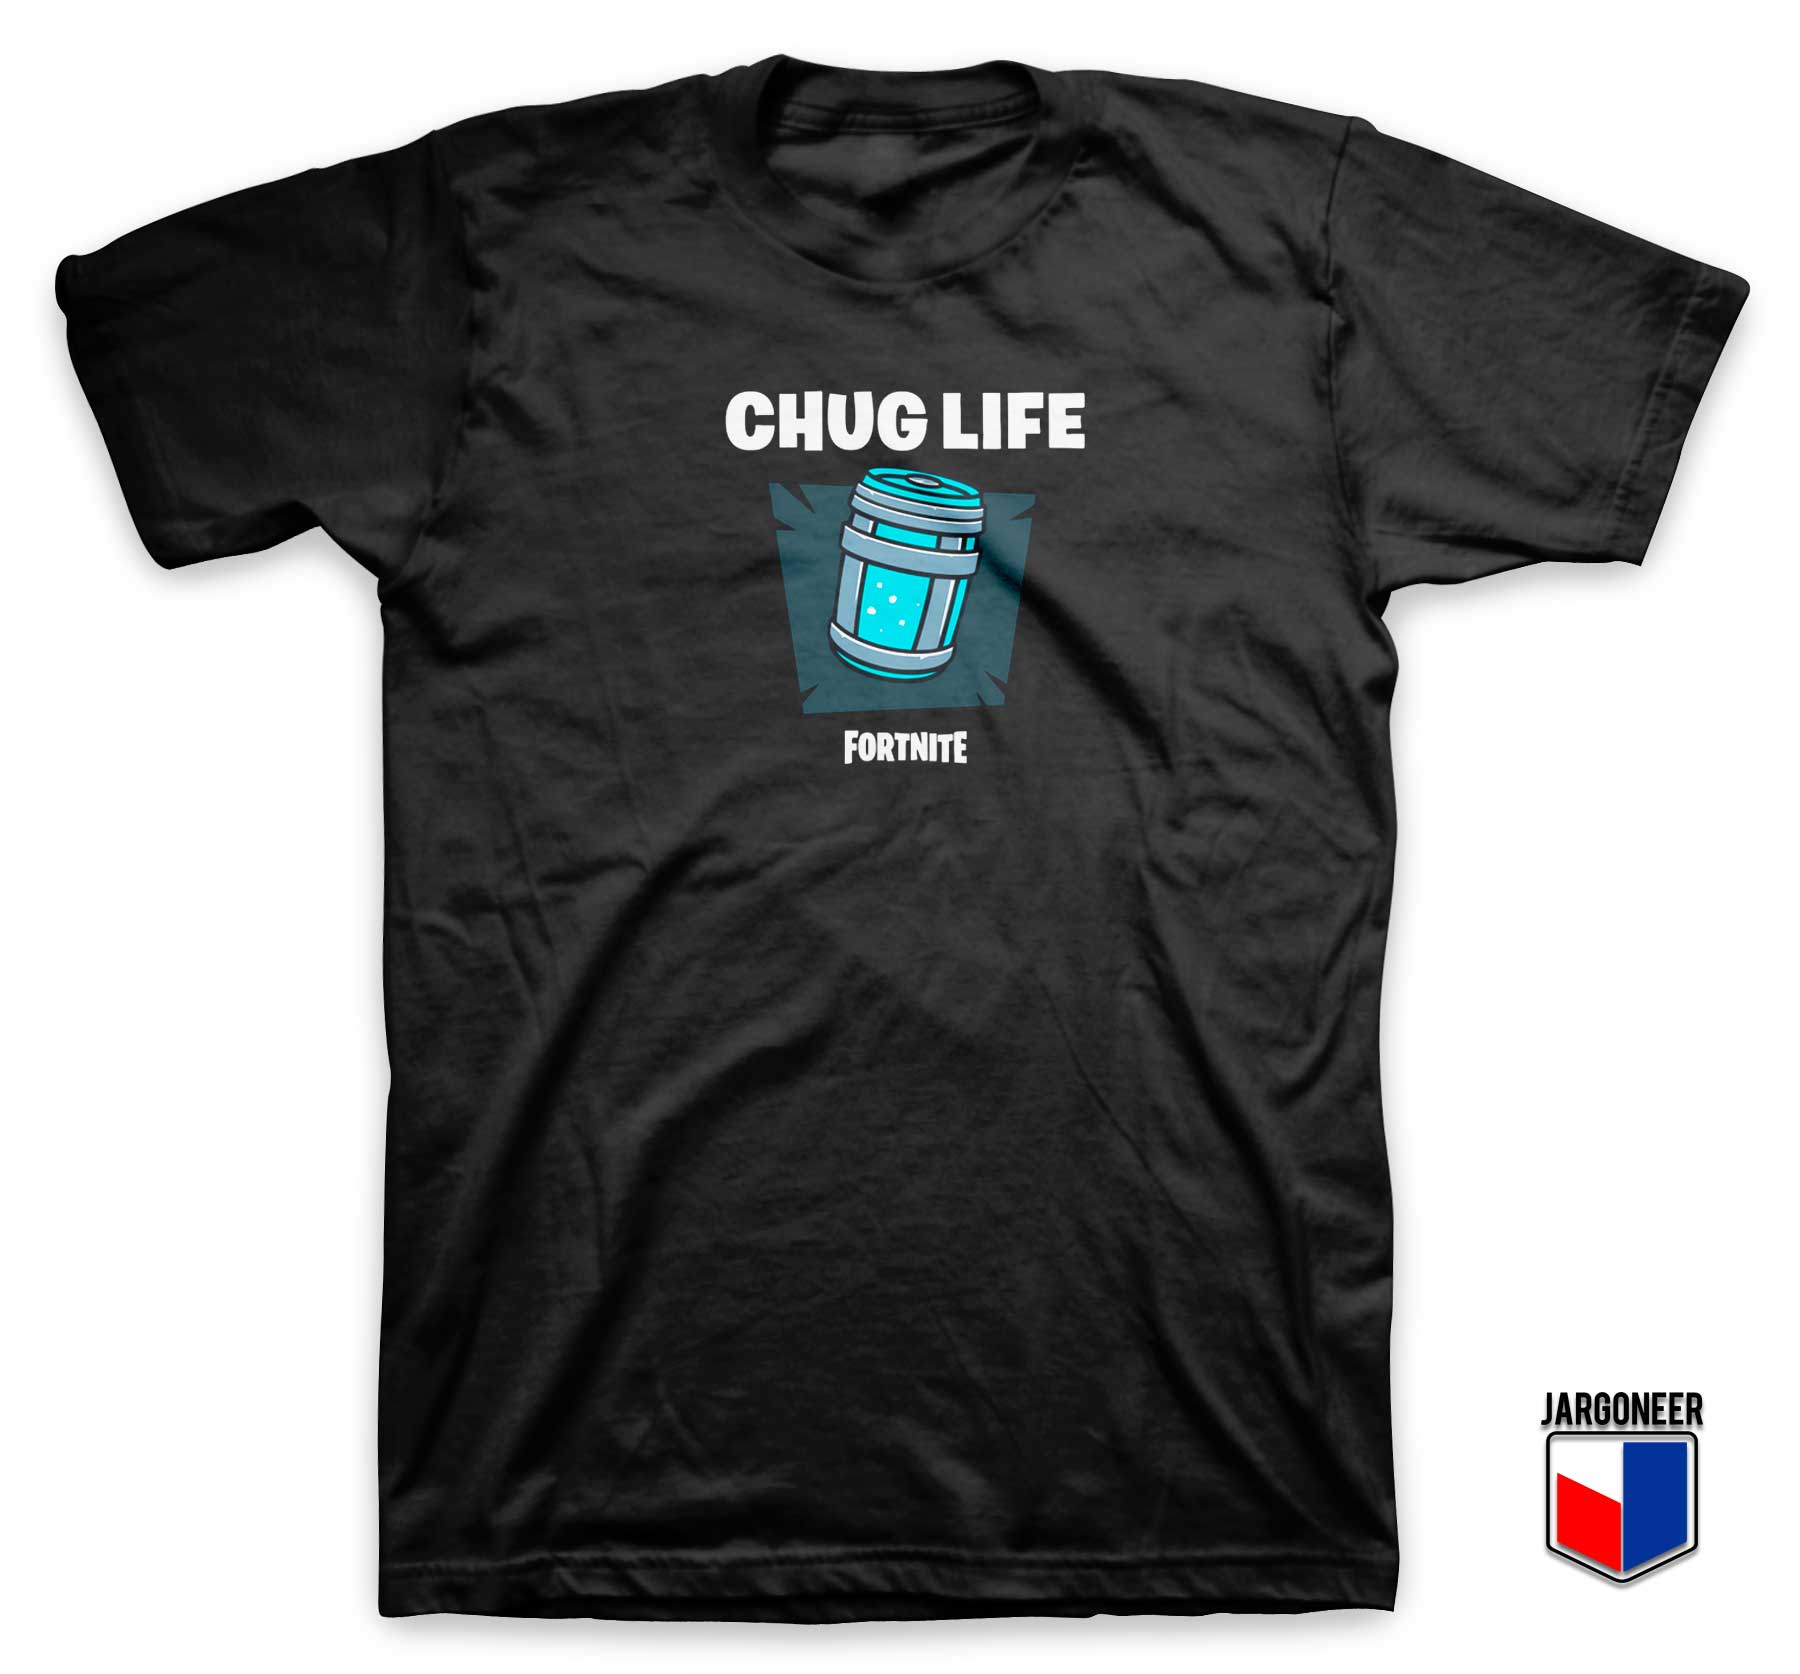 Chug Life Fortnite T Shirt - Shop Unique Graphic Cool Shirt Designs